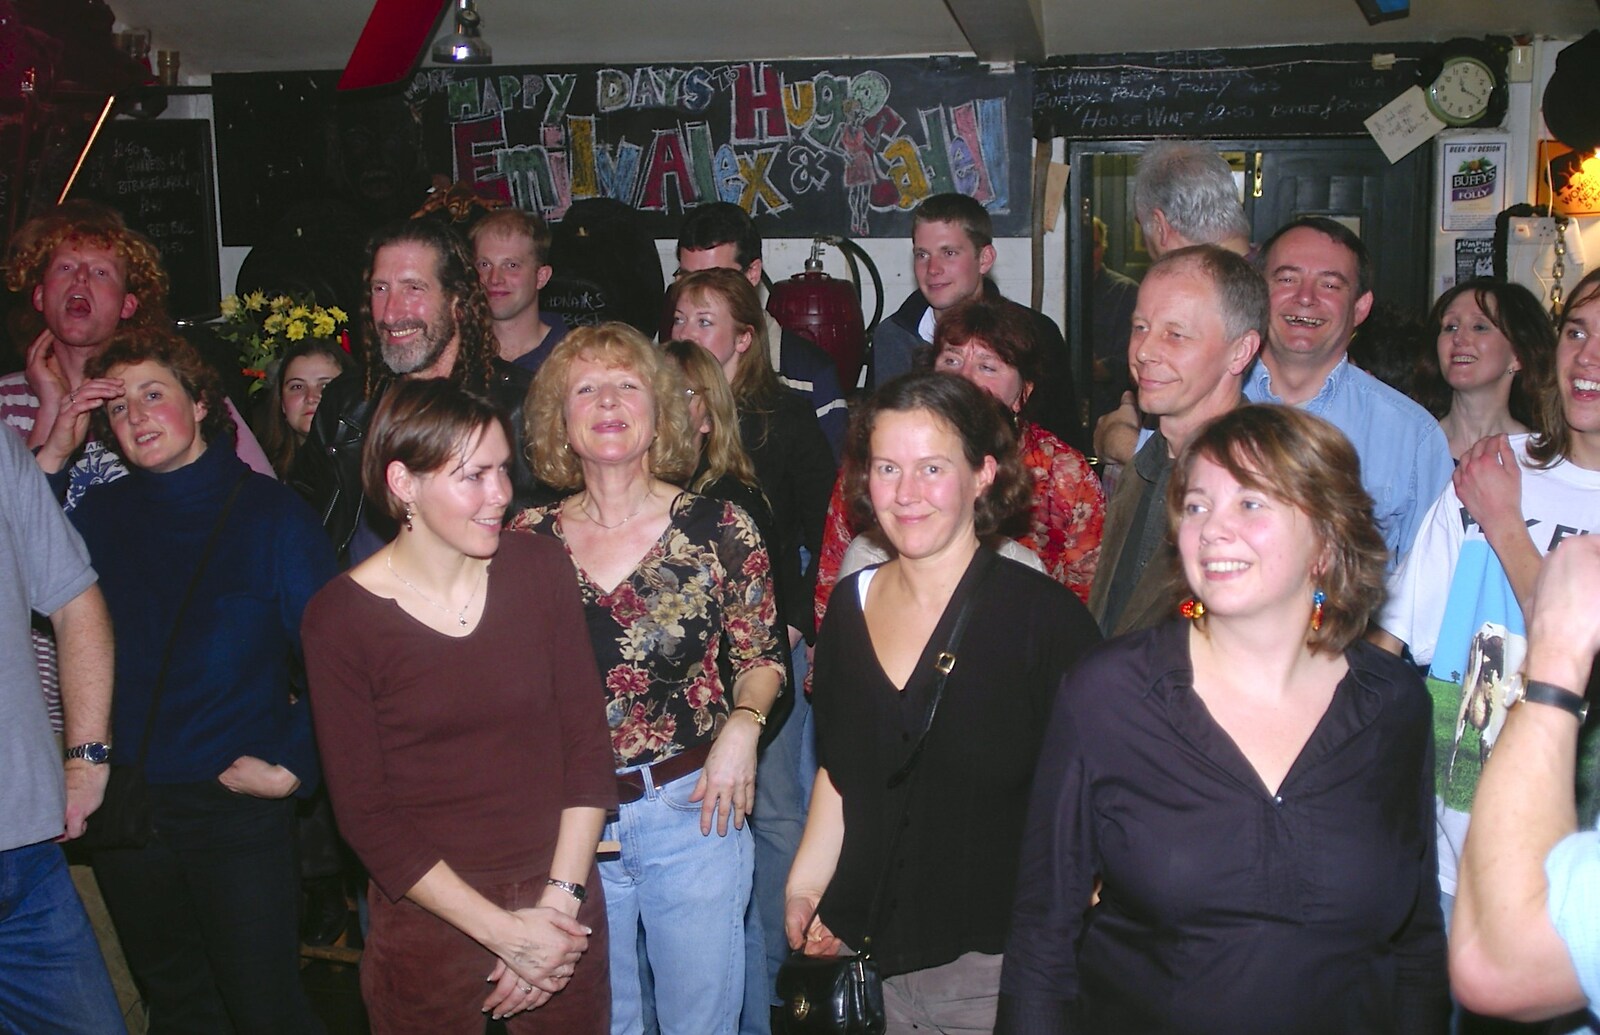 The BBs' Last-Ever Gig at The Cider Shed, Banham, Norfolk - 19th November 2004: More crowd scenes